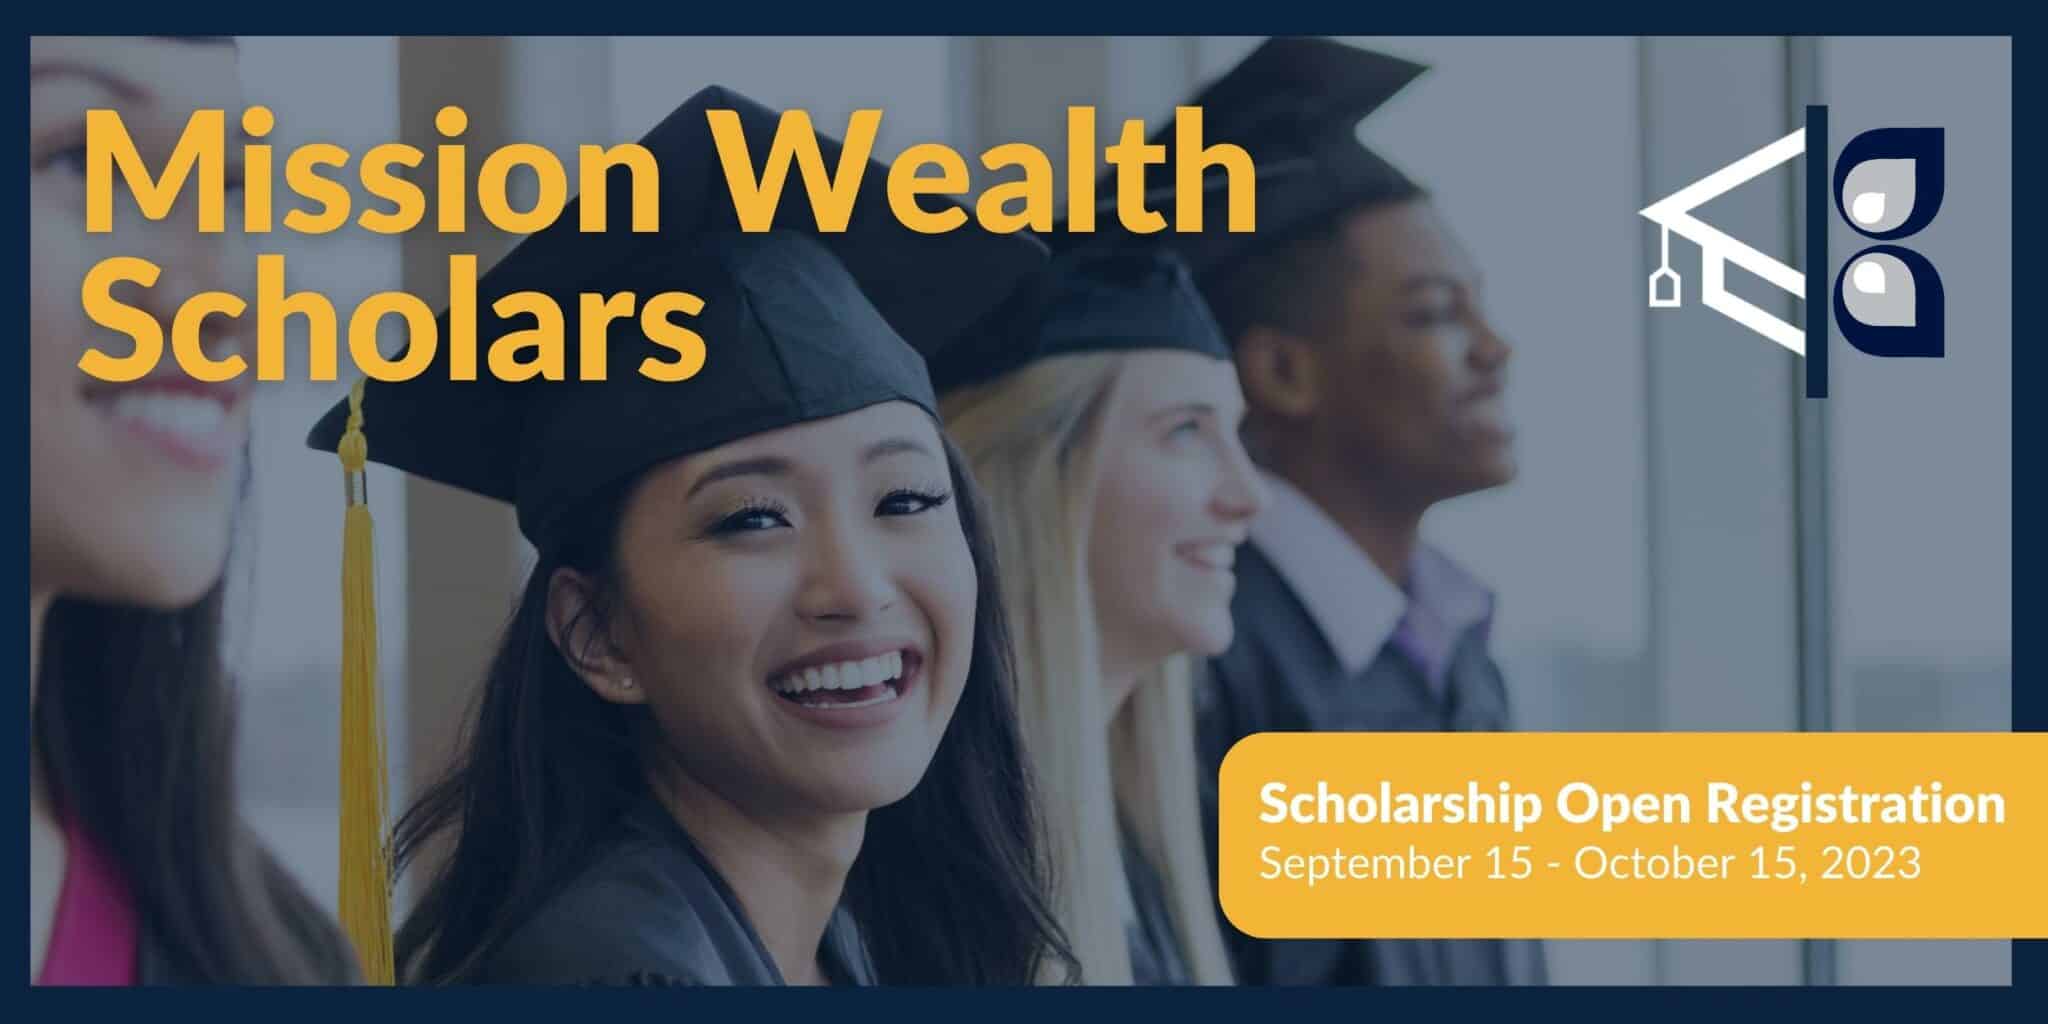 Mission Wealth Scholars 2023 Scholarship Registration Now Open